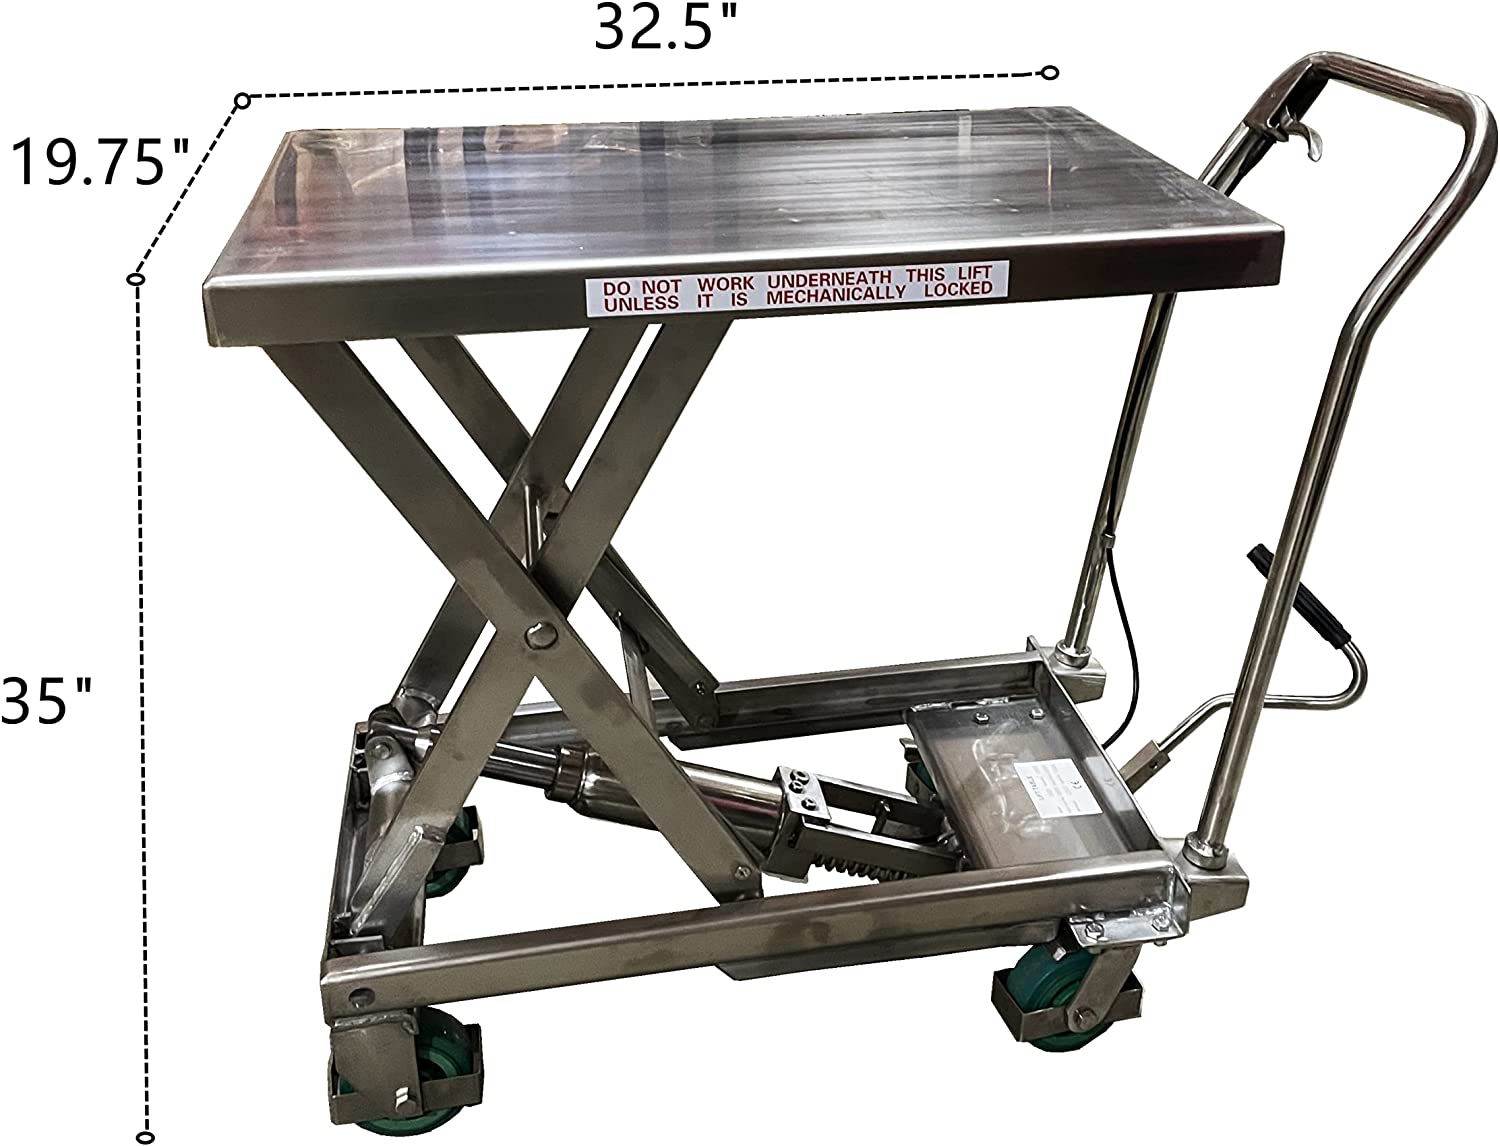 Pake Handling Tools PAKLT03 Stainless Scissor Lift Table 550lb Capacity 32.5" x 19.75" Platform New